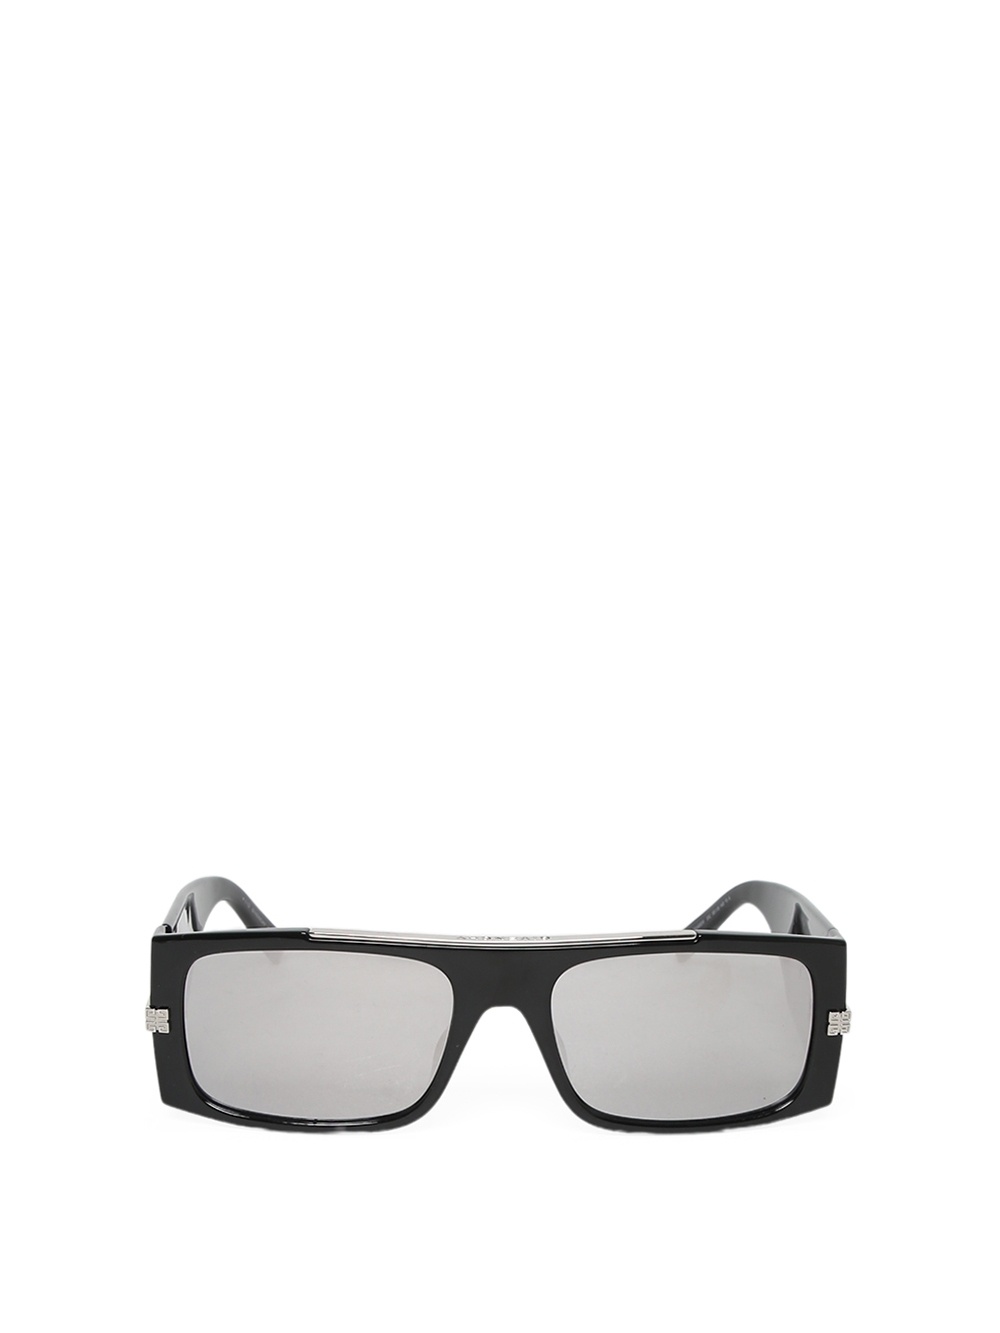 Hinge Sunglasses Shiny Black And Smoke Mirror - 1